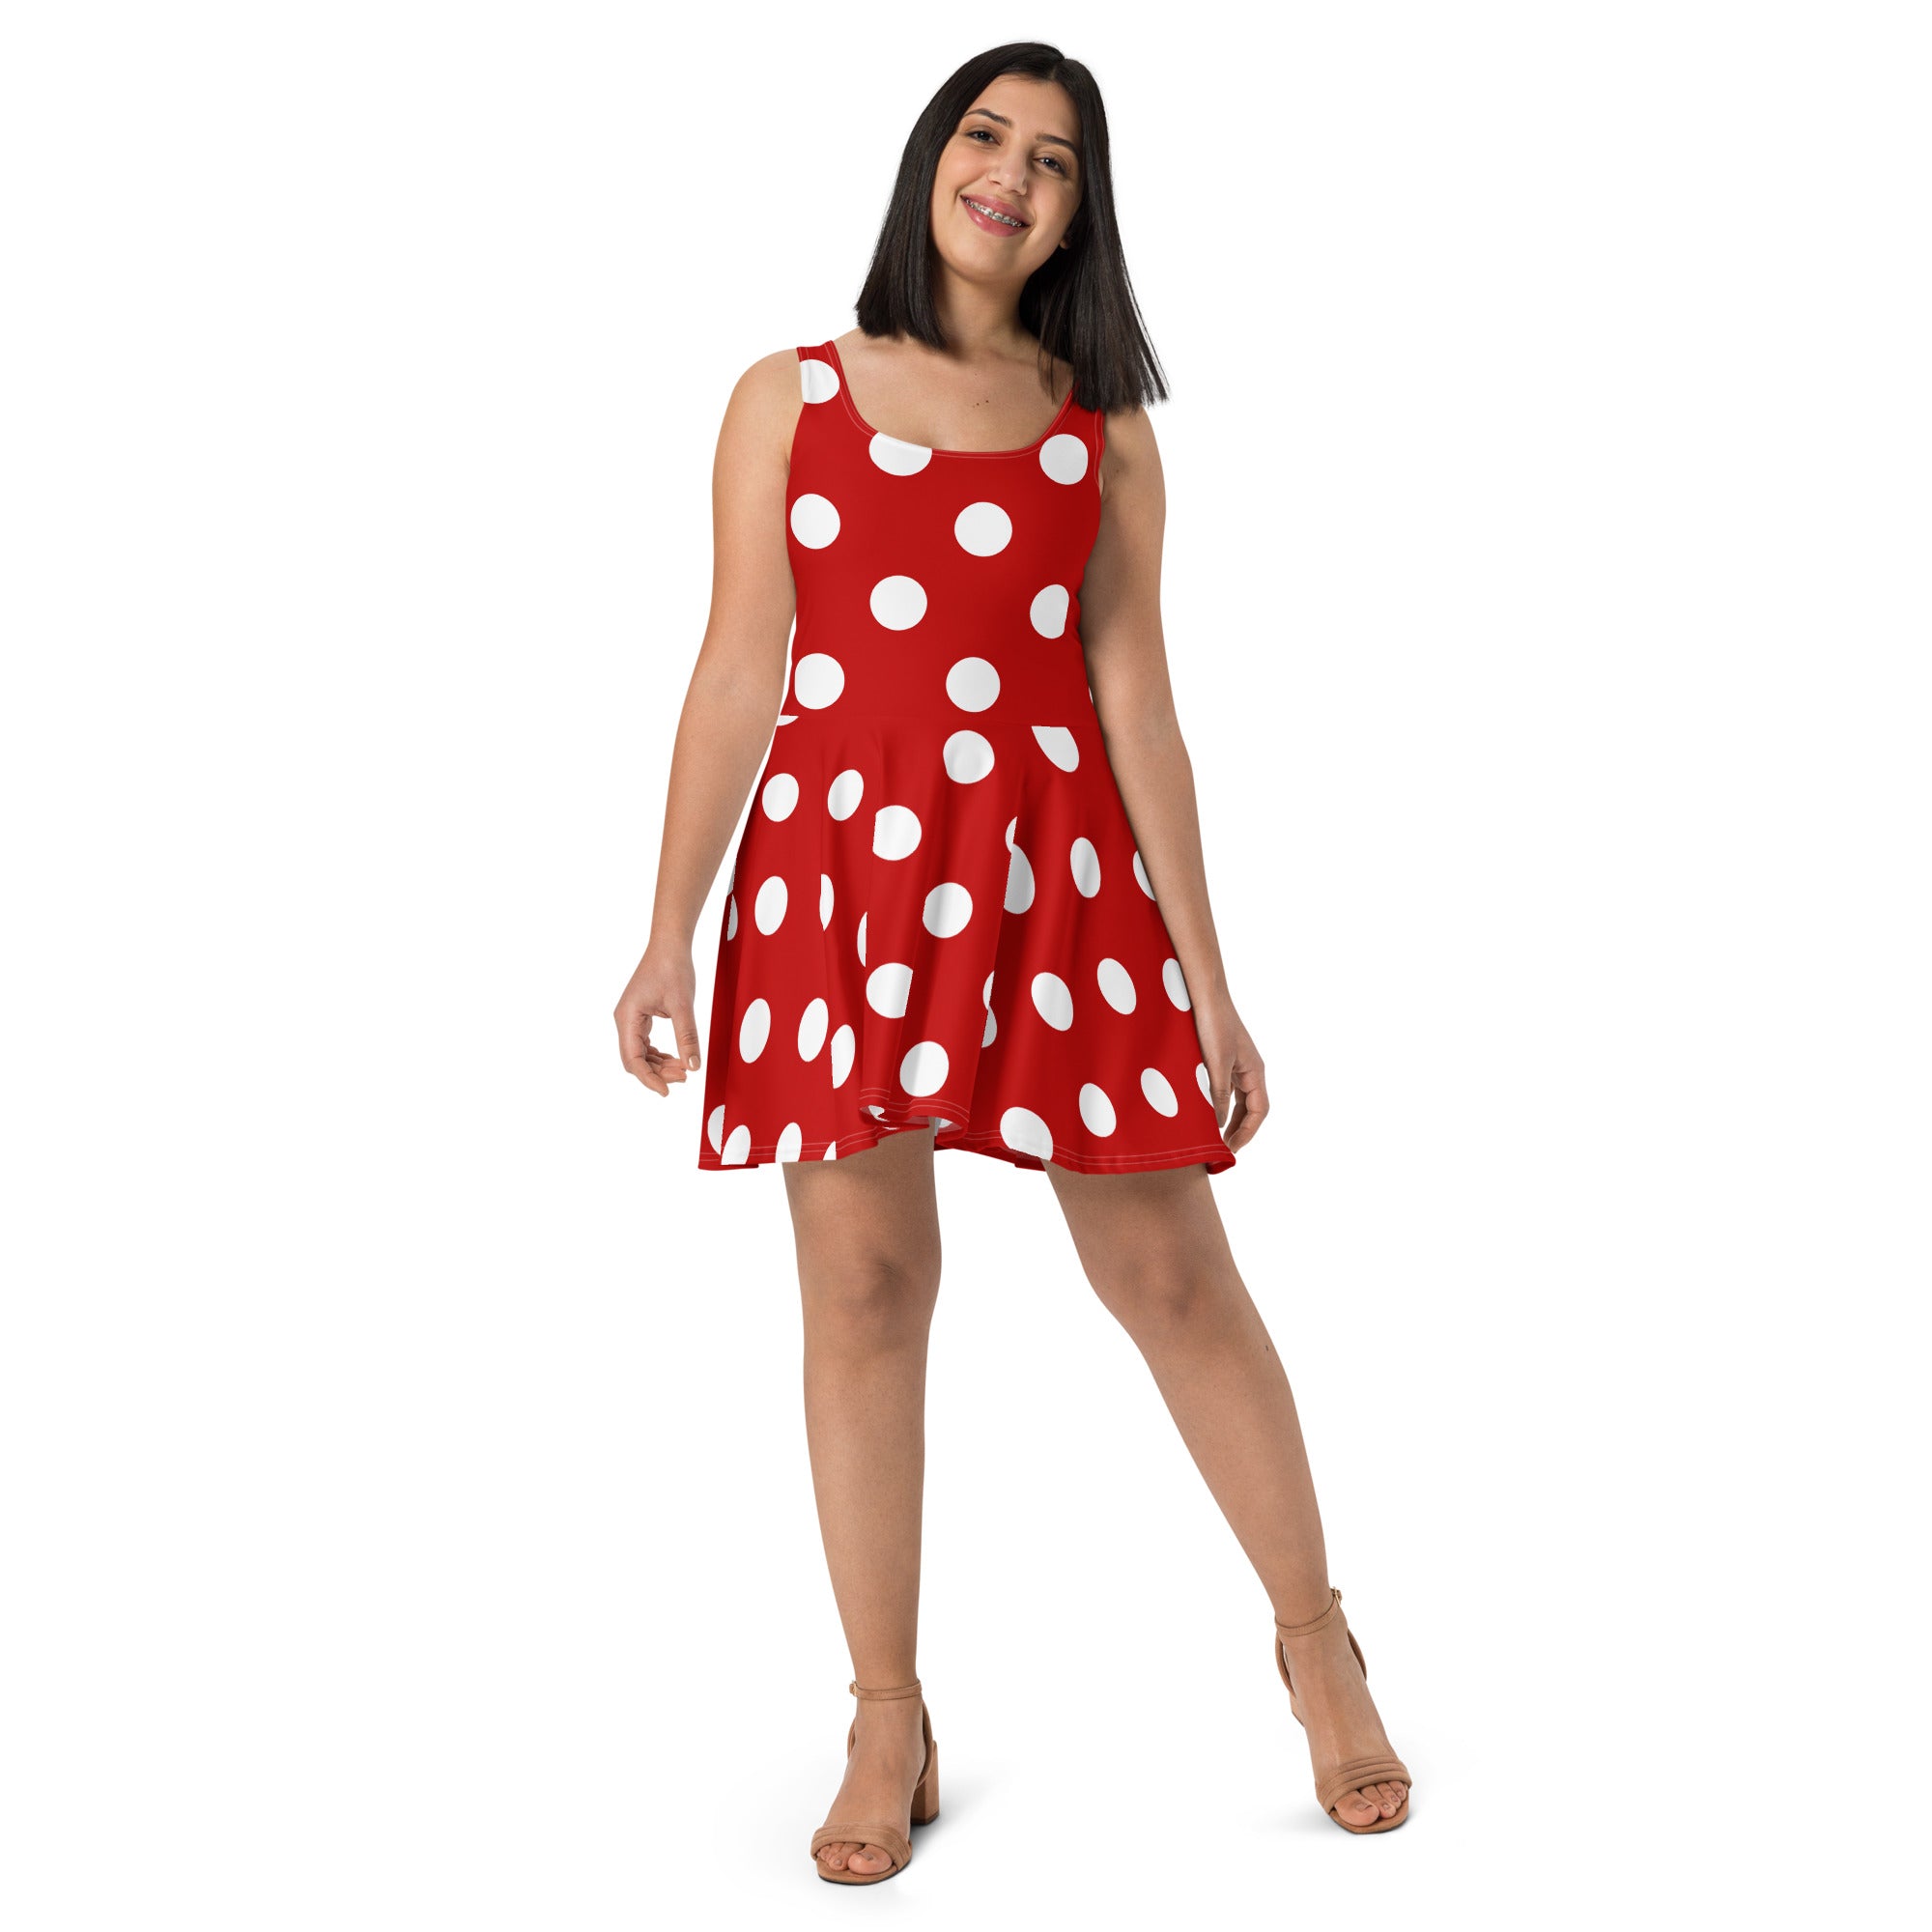 Polka Dot Red and White Skater Dress, lioness-love